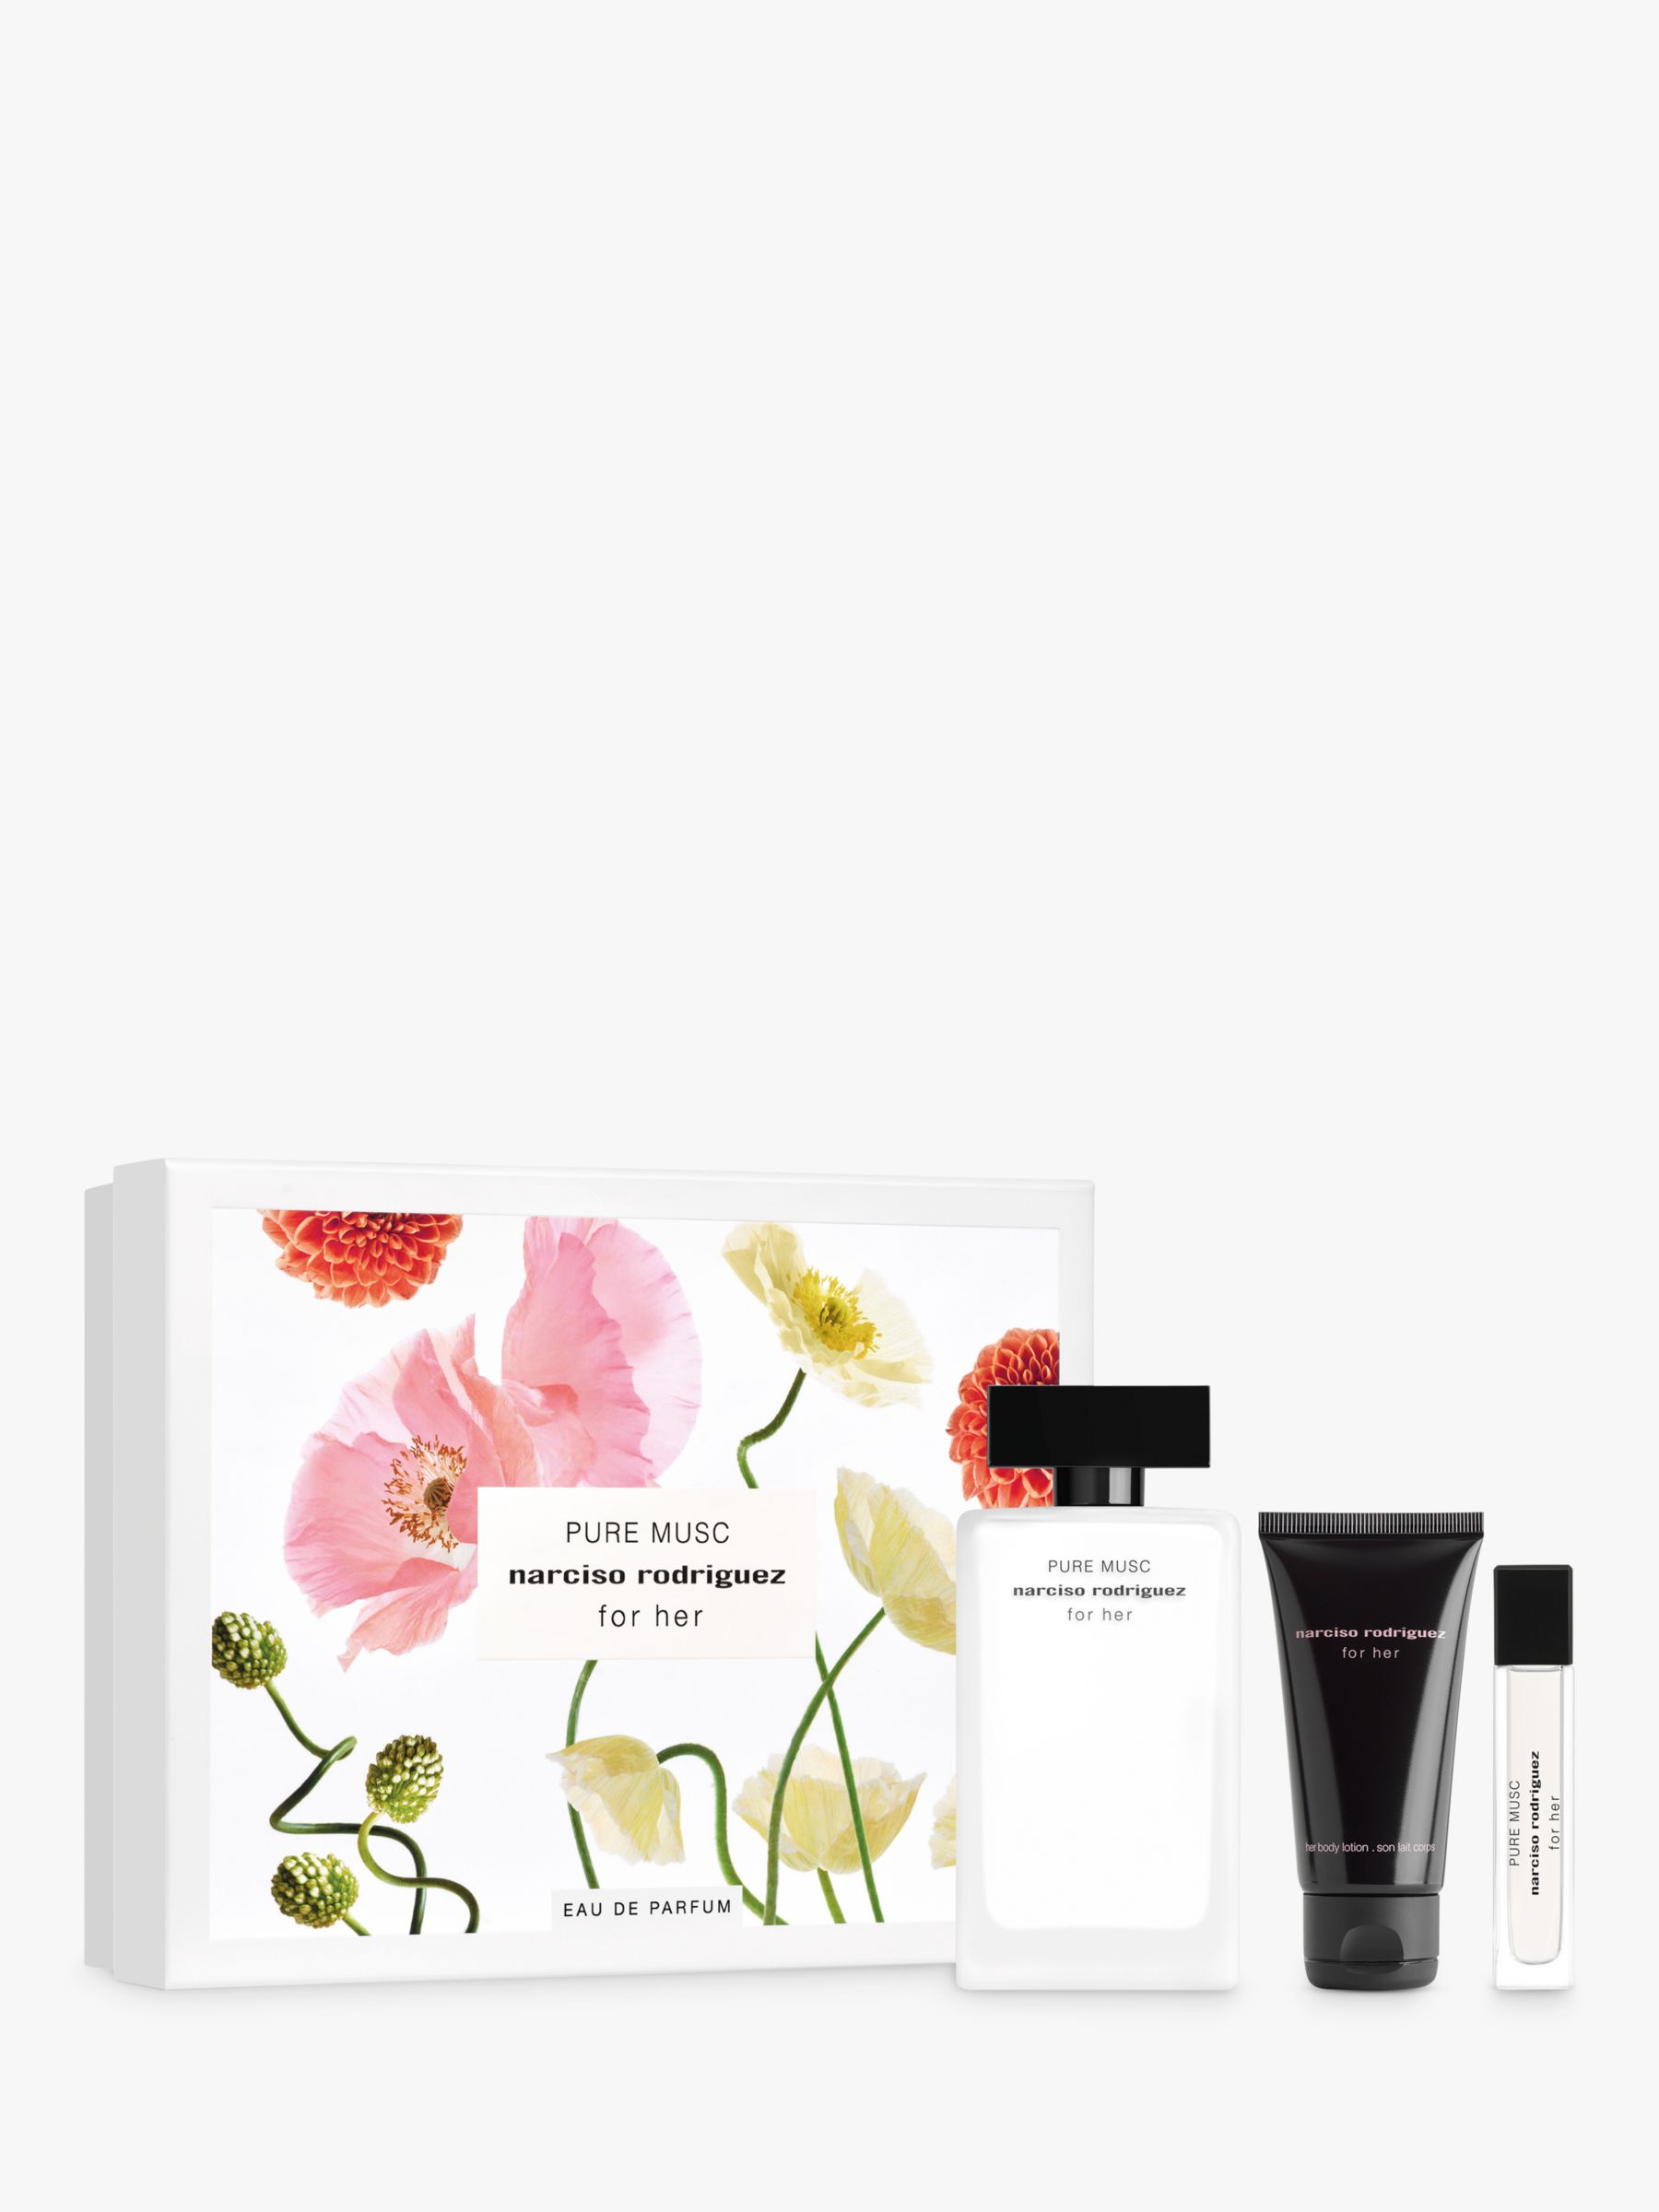 Narciso Rodriguez For Gift Pure Lewis Set Parfum John Her Partners & at Musc Eau de